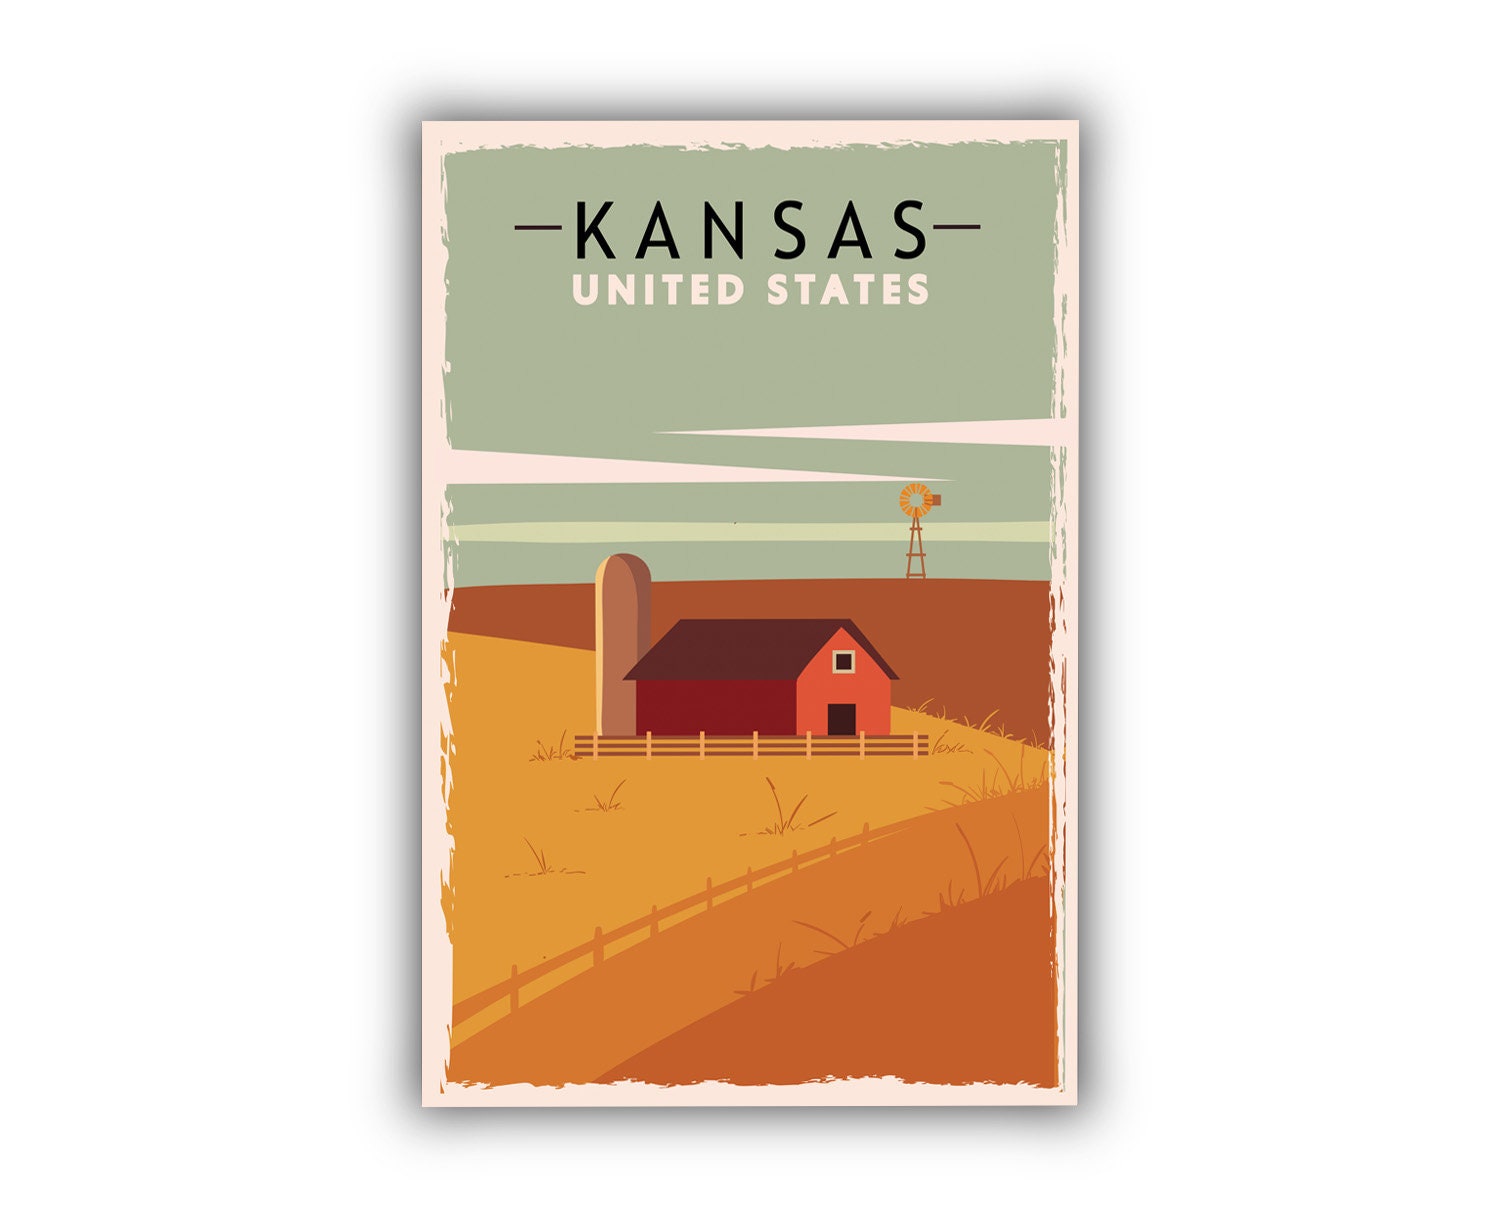 Kansas Vintage Rustic Poster Print, Retro Style Travel Poster